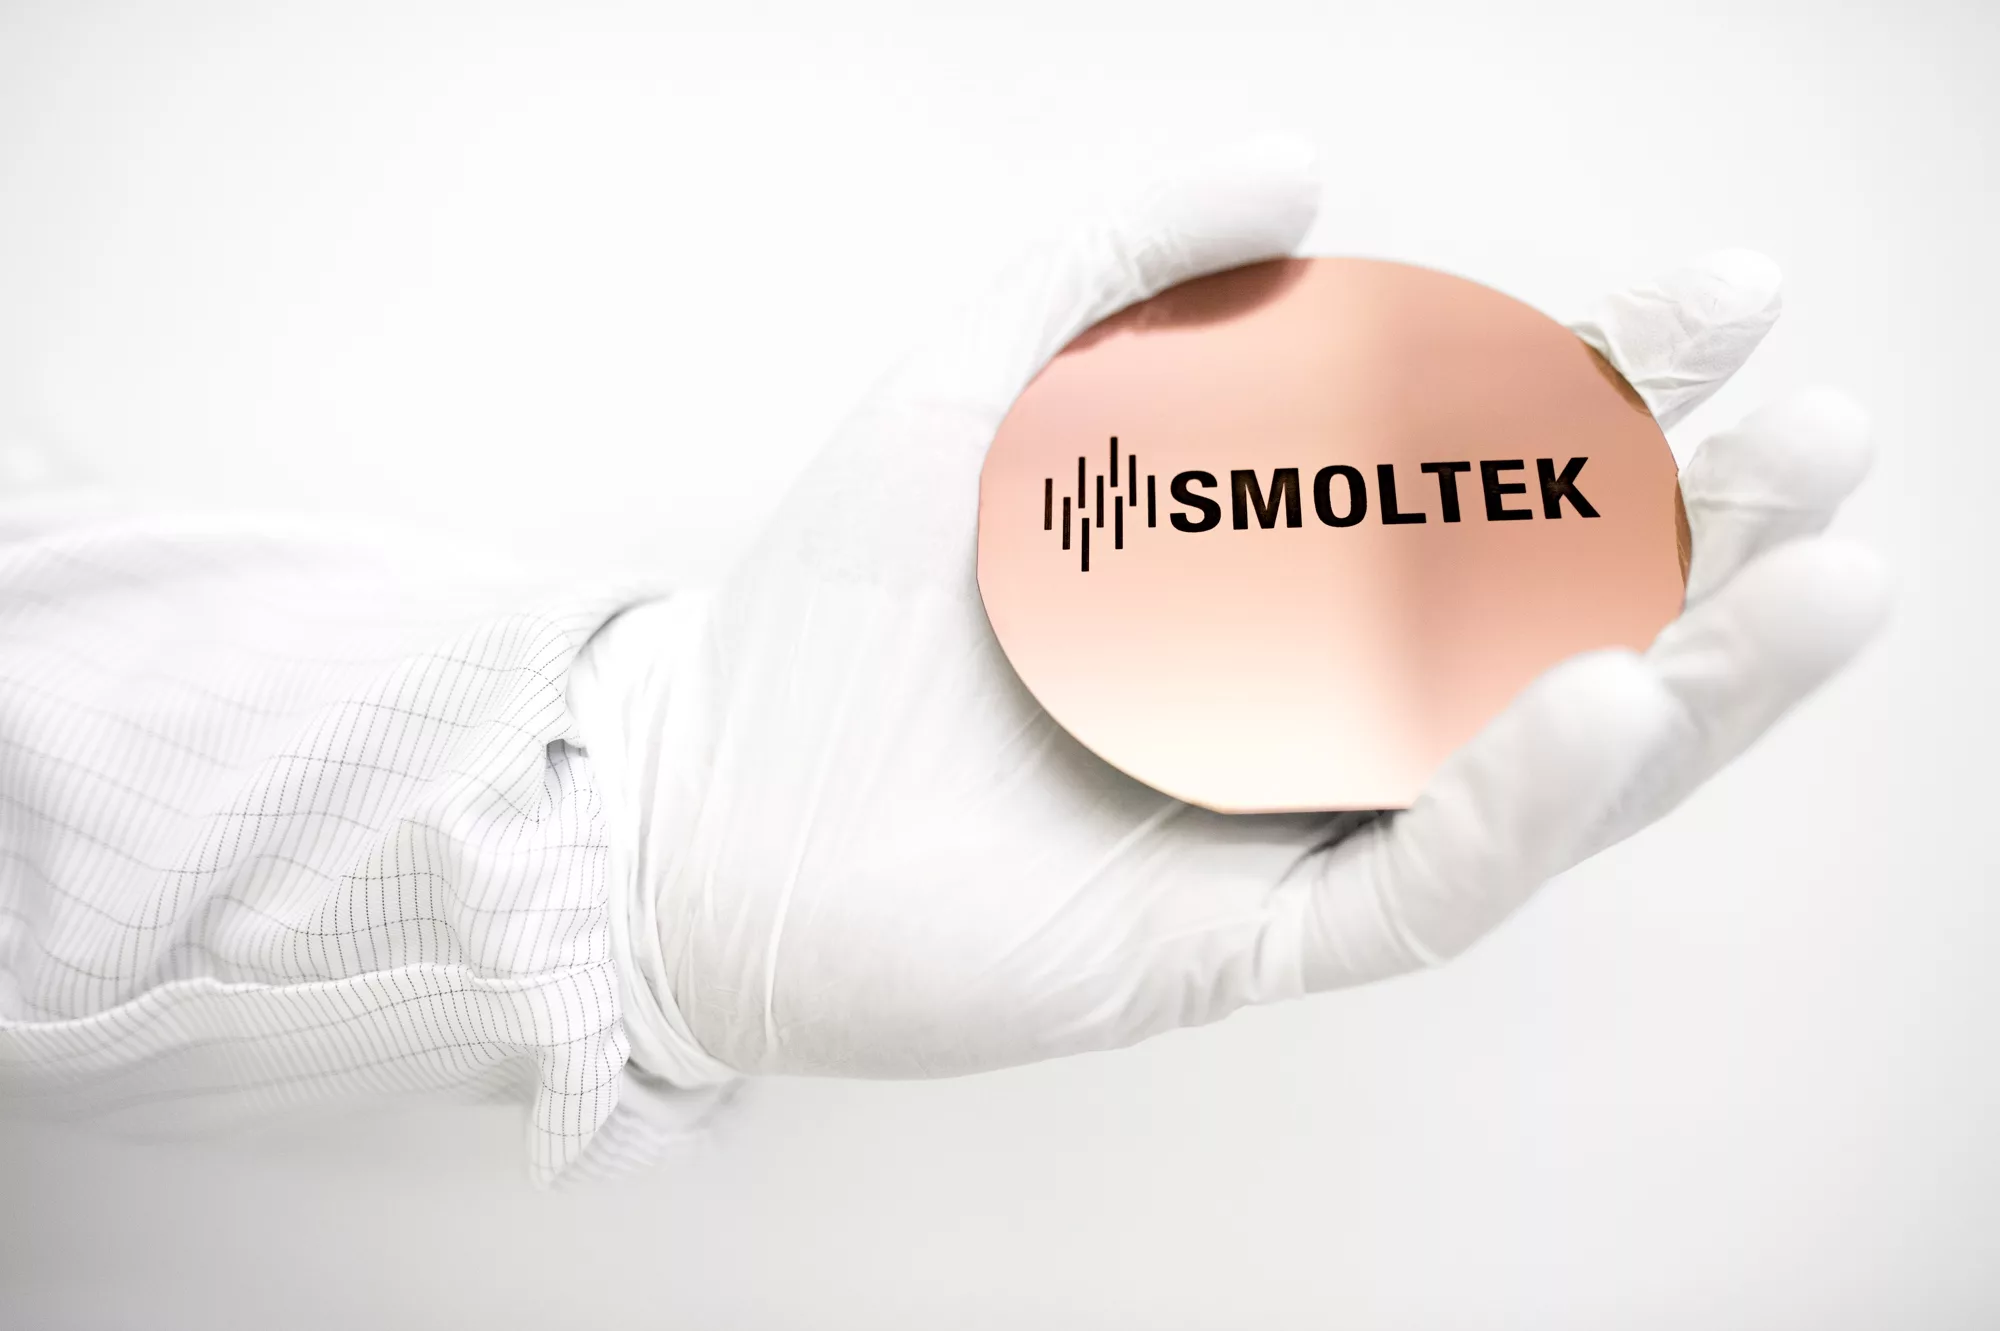 Smoltek – Pioneering Carbon Nanotechnology